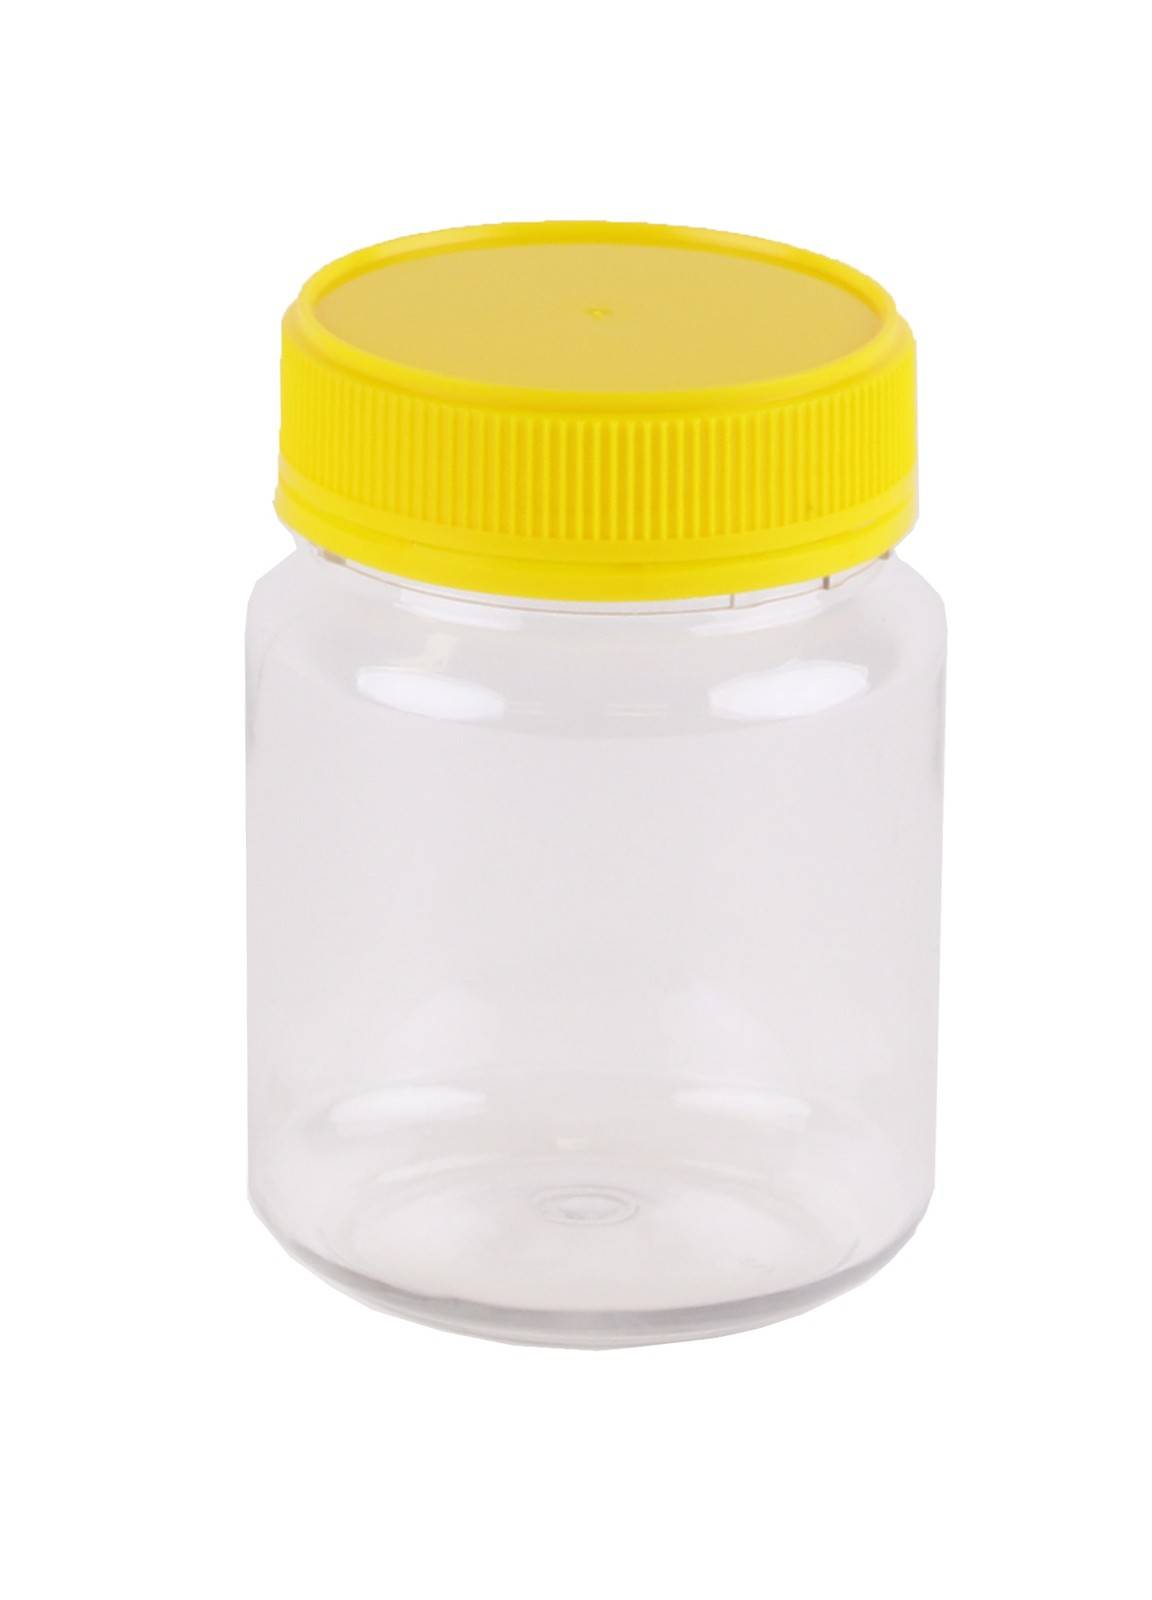 Carton of 288pc Honey Jars - 350gm size - Round Yellow Anti-theft Lid and Jar - Food grade